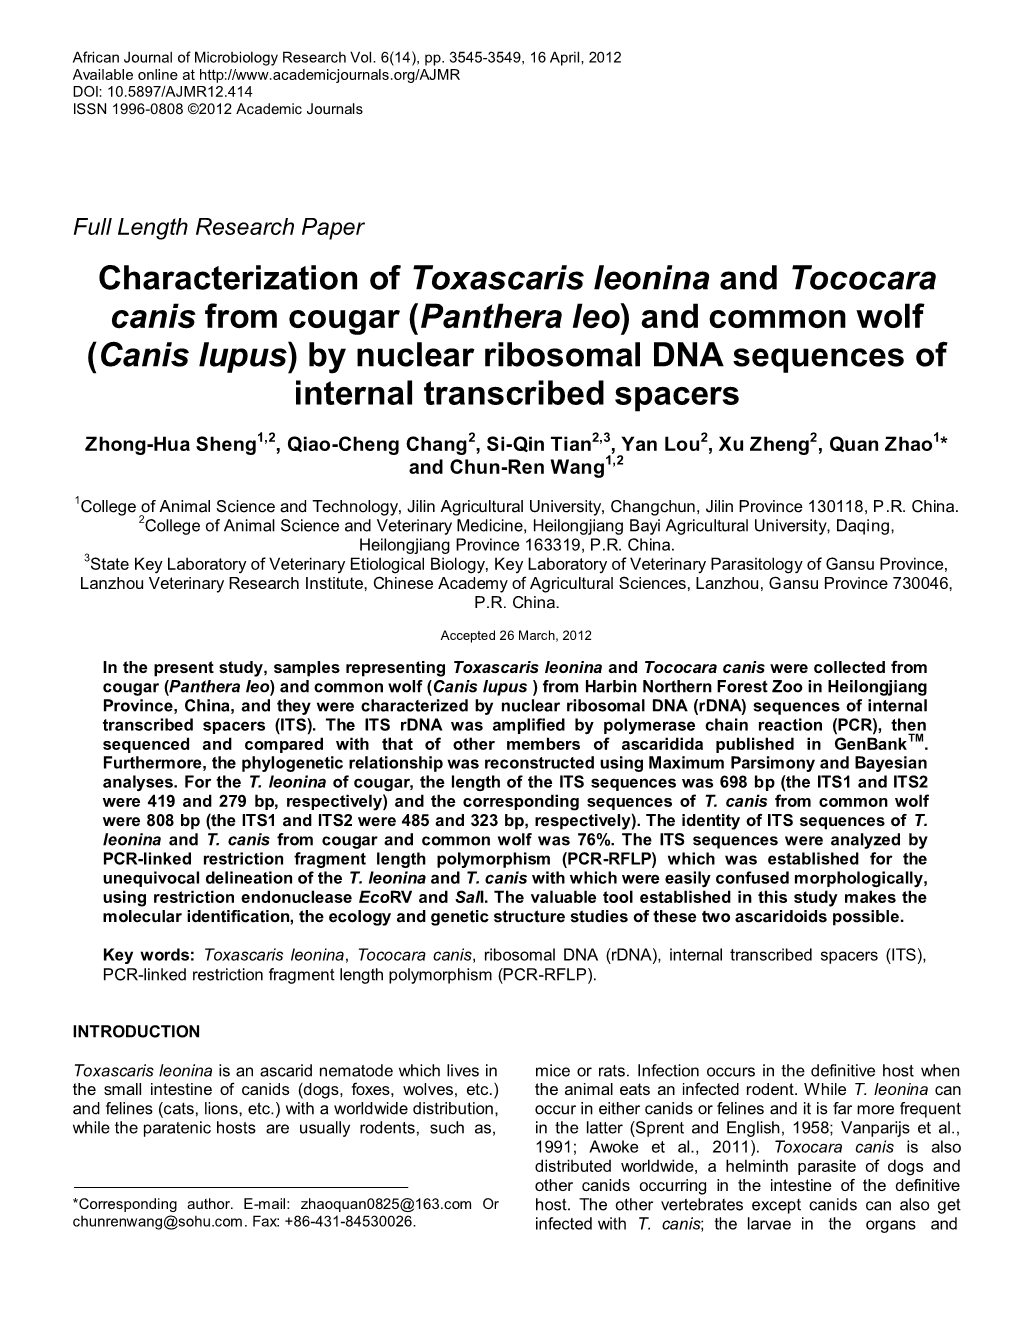 Characterization of Toxascaris Leonina and Tococara